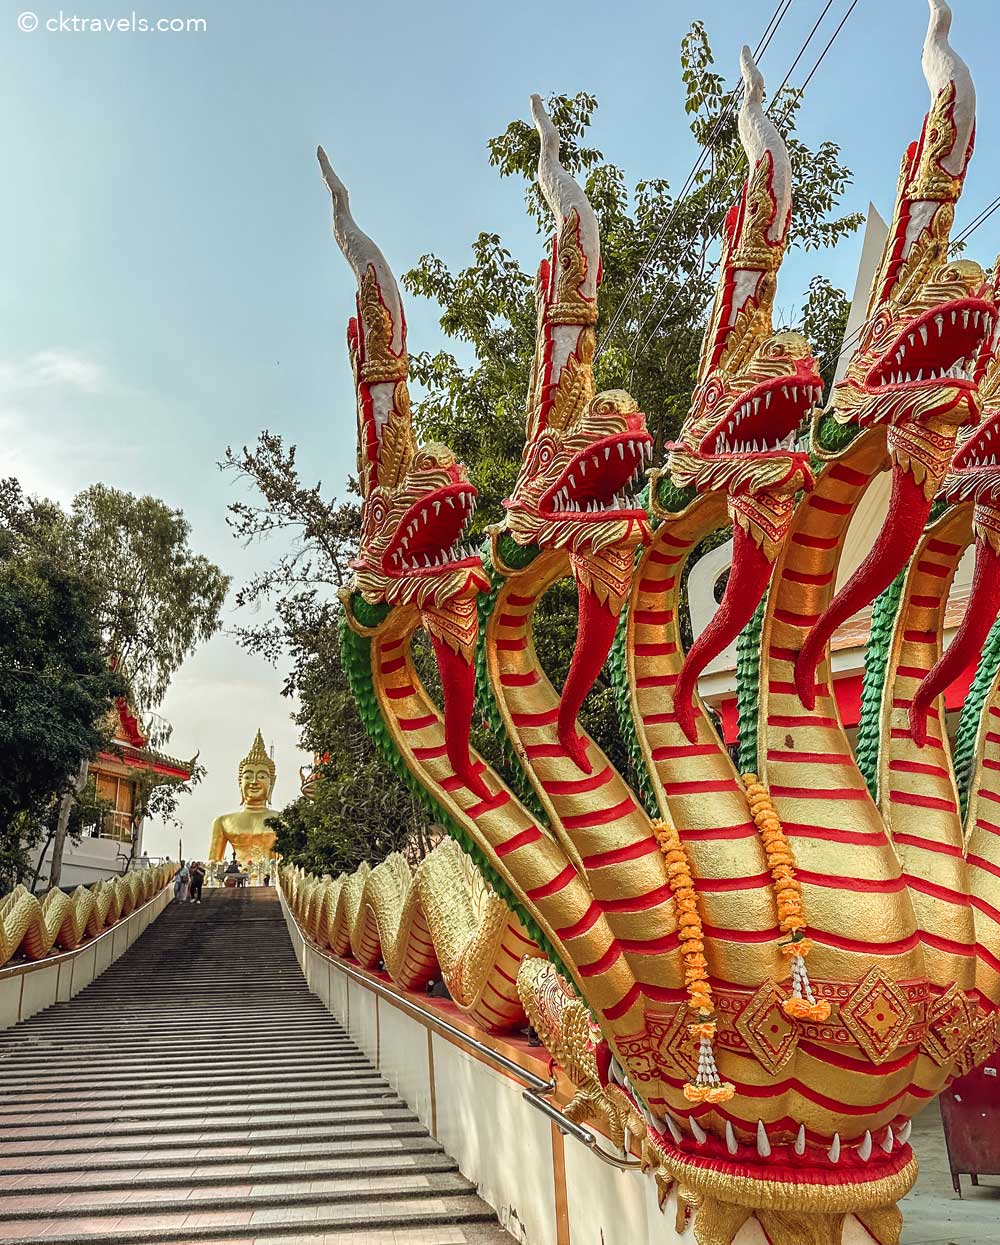 Pattaya’s Big Buddha Temple